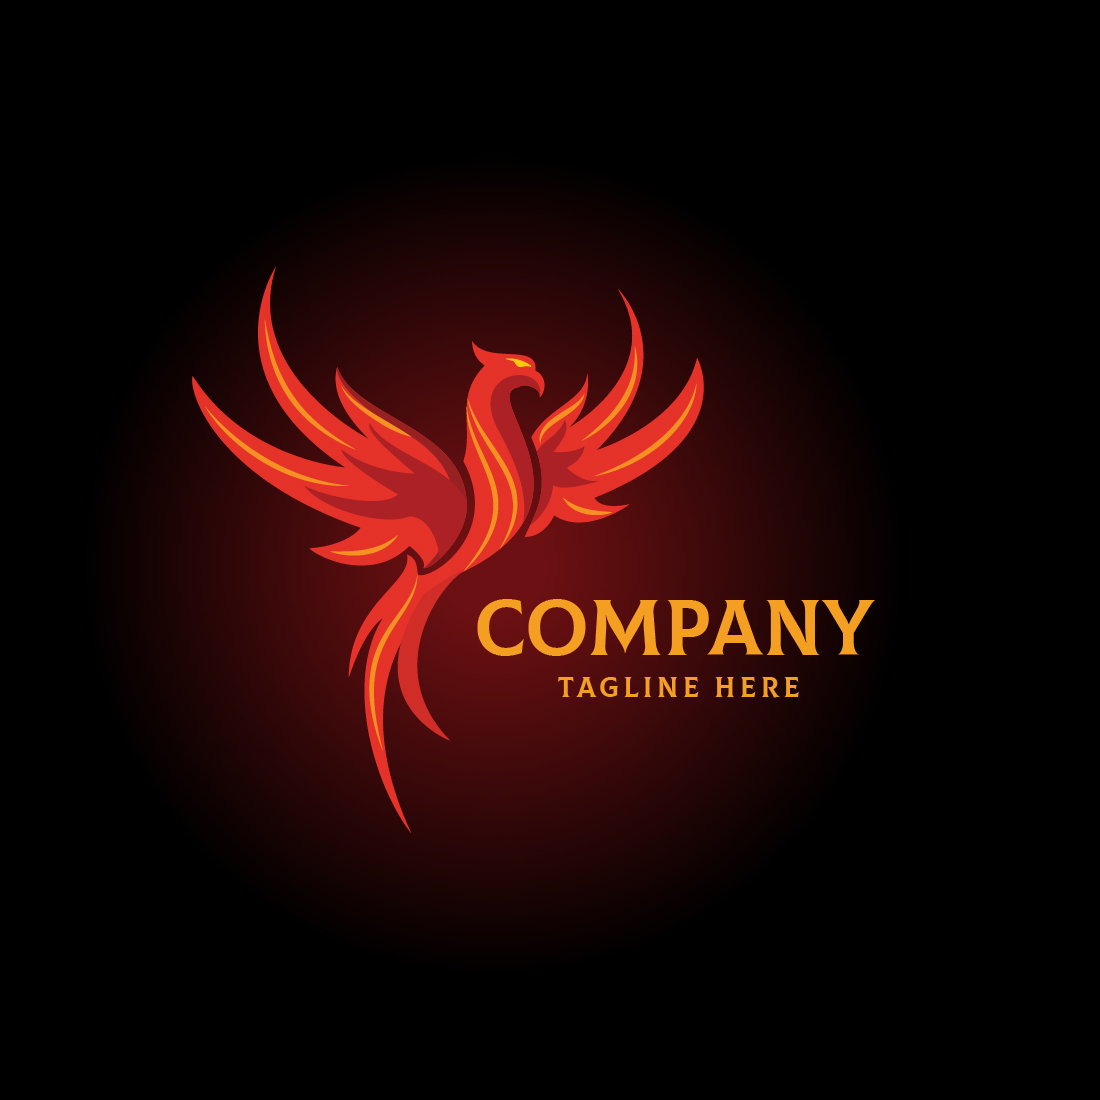 Phoenix Logos preview image.